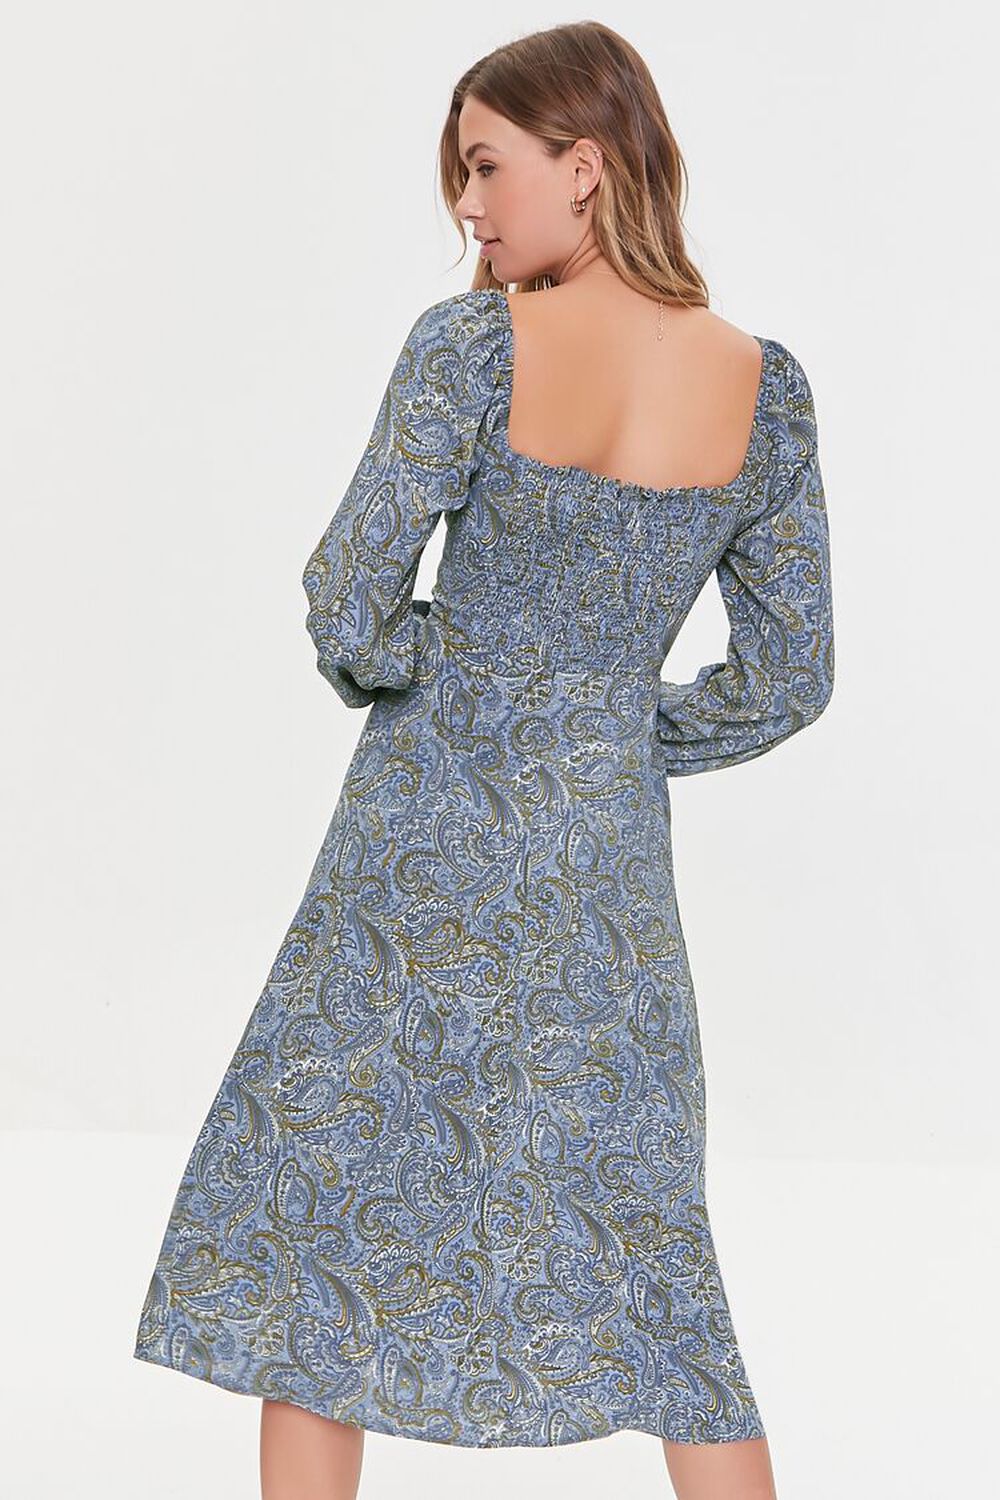 BLUE/MULTI Paisley Print Midi Dress, image 3